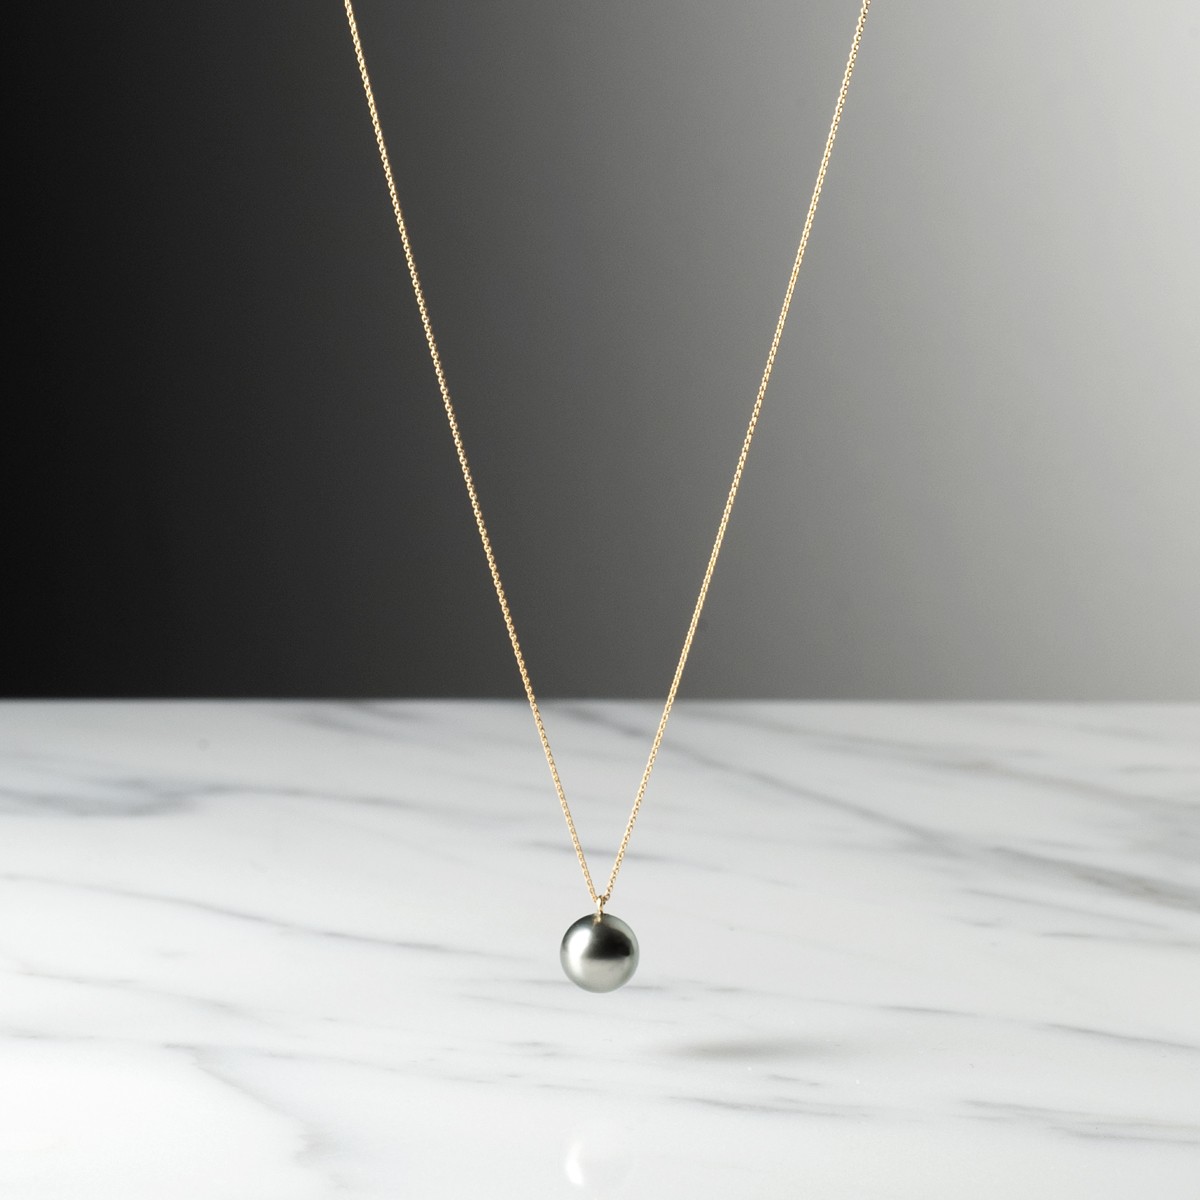 JO 1703 YELLOW GOLD - Handmade necklace